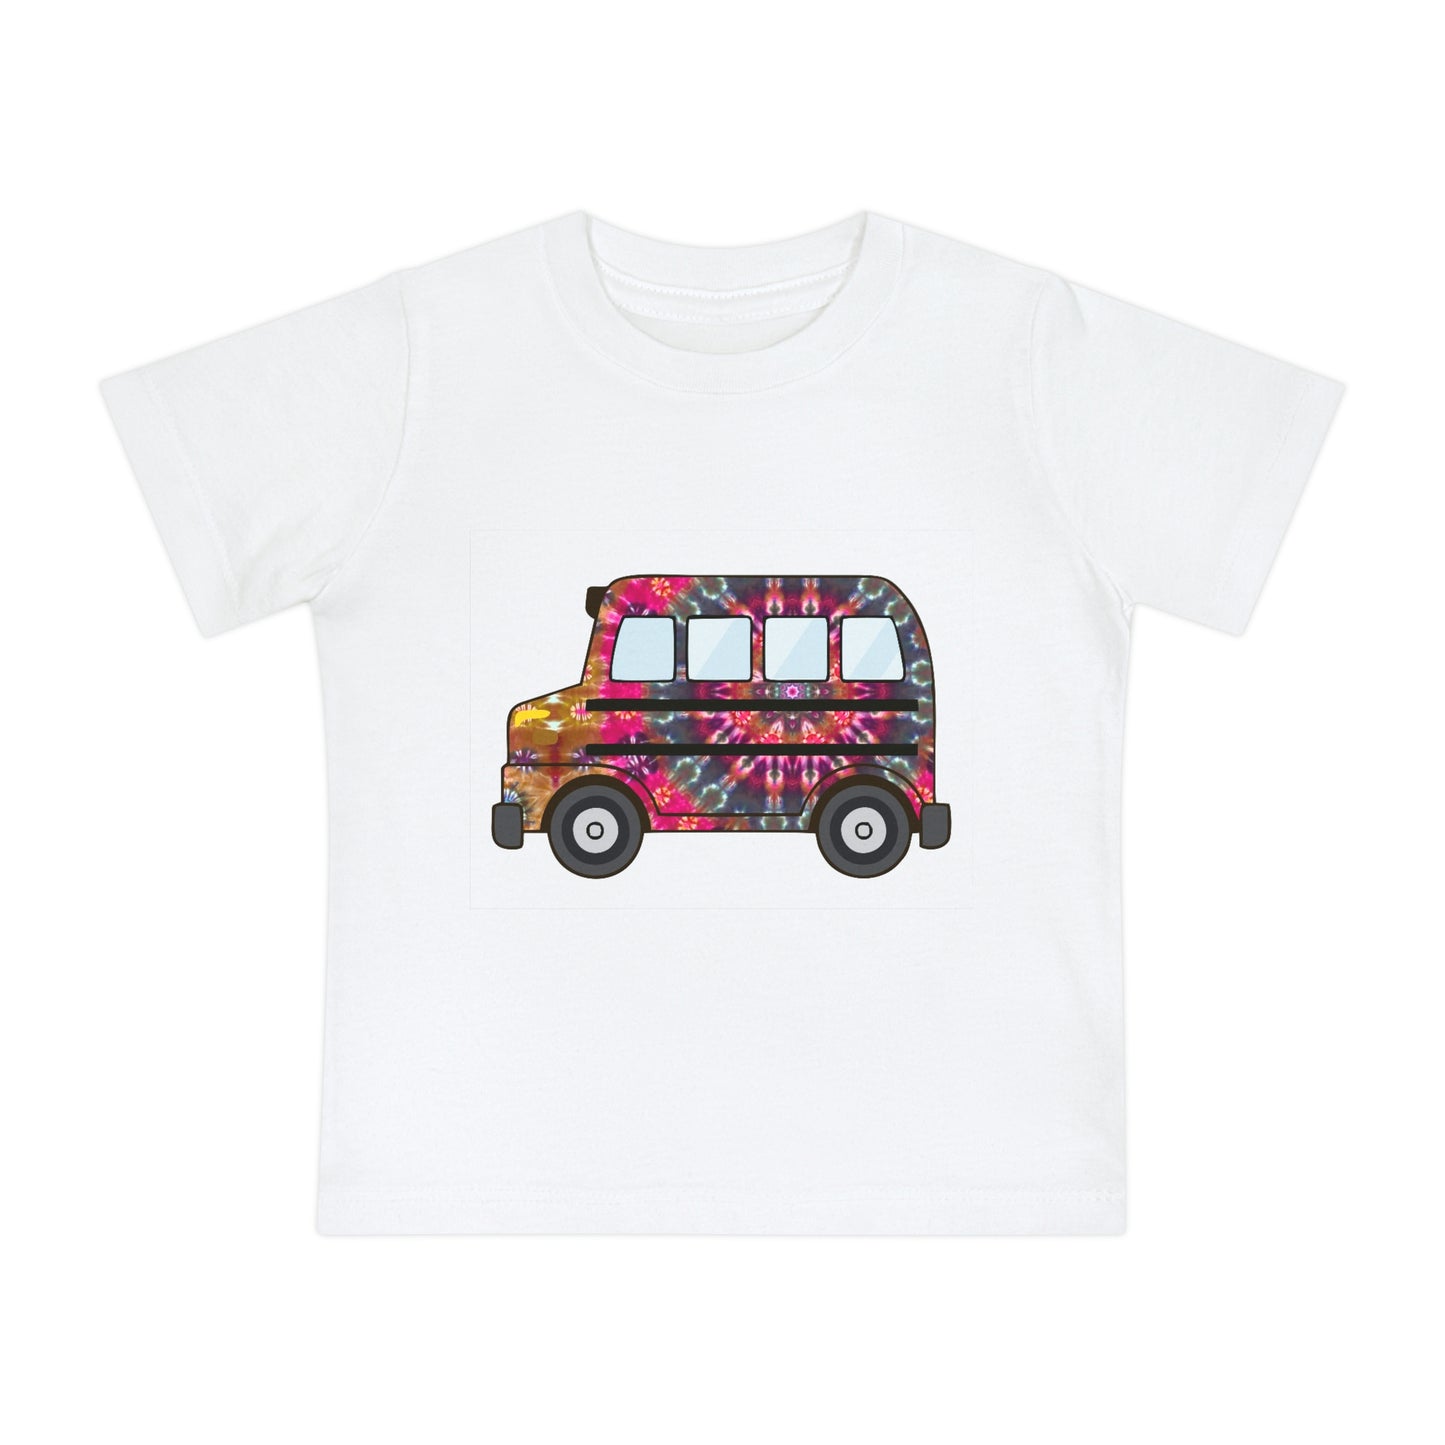 Rainbow Tie-Dye Bus on Baby Short Sleeve T-Shirt